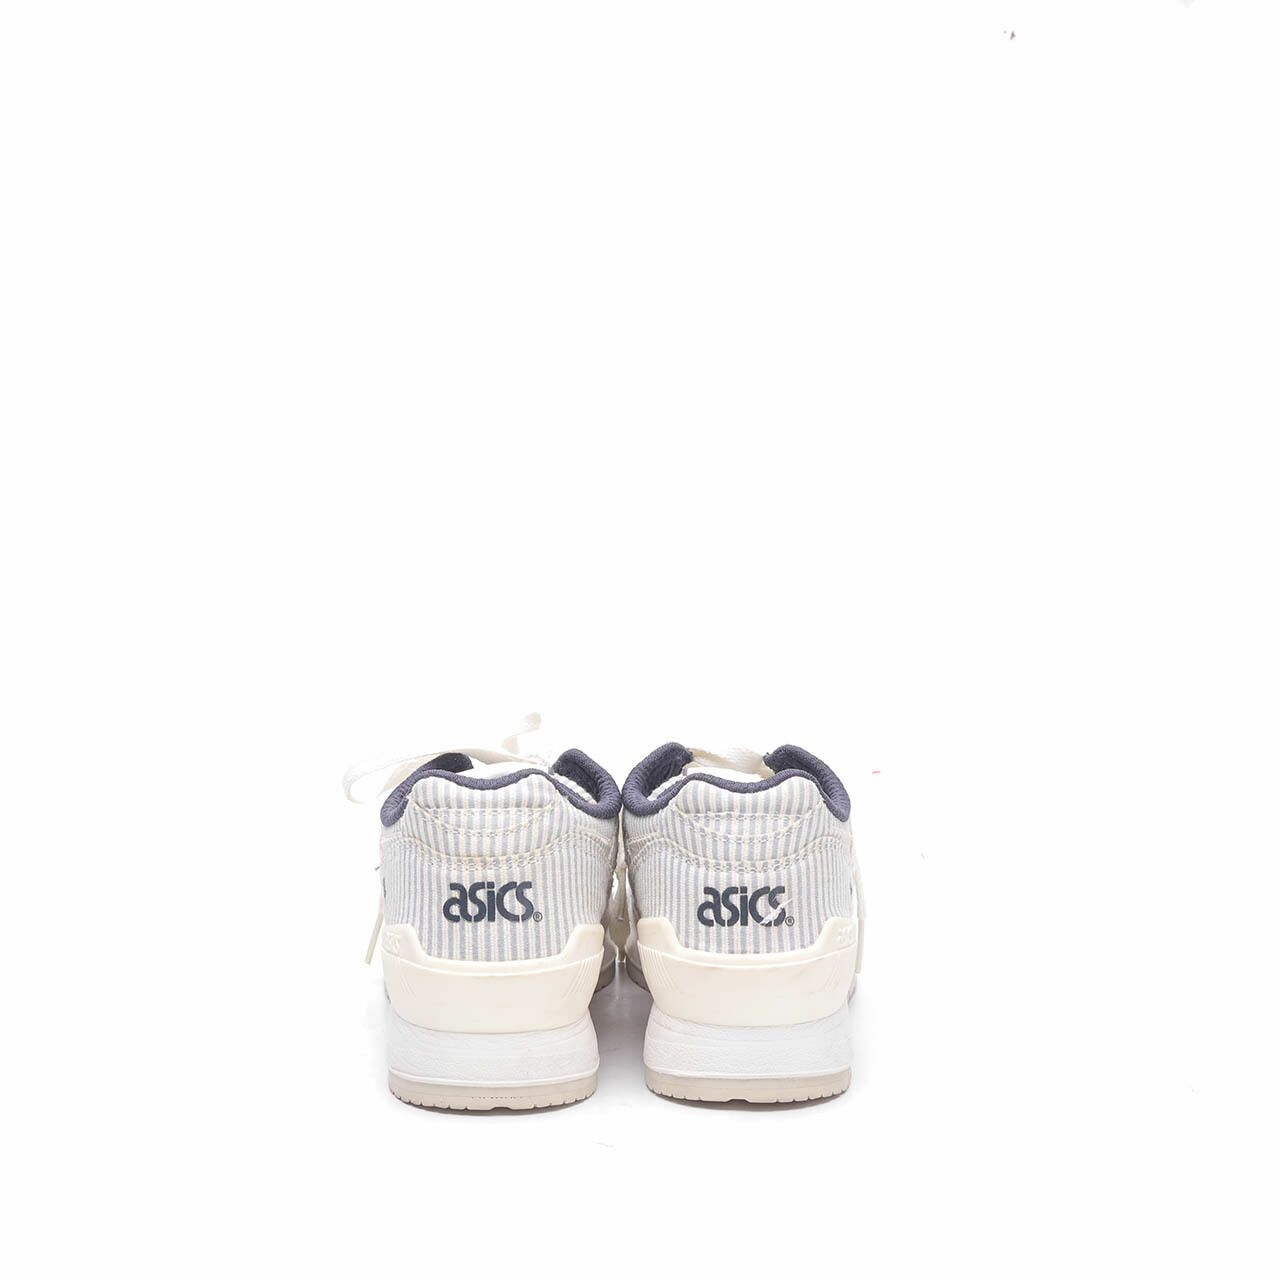 ASICS Gel-Respector Millionaires Row Blue Sneakers